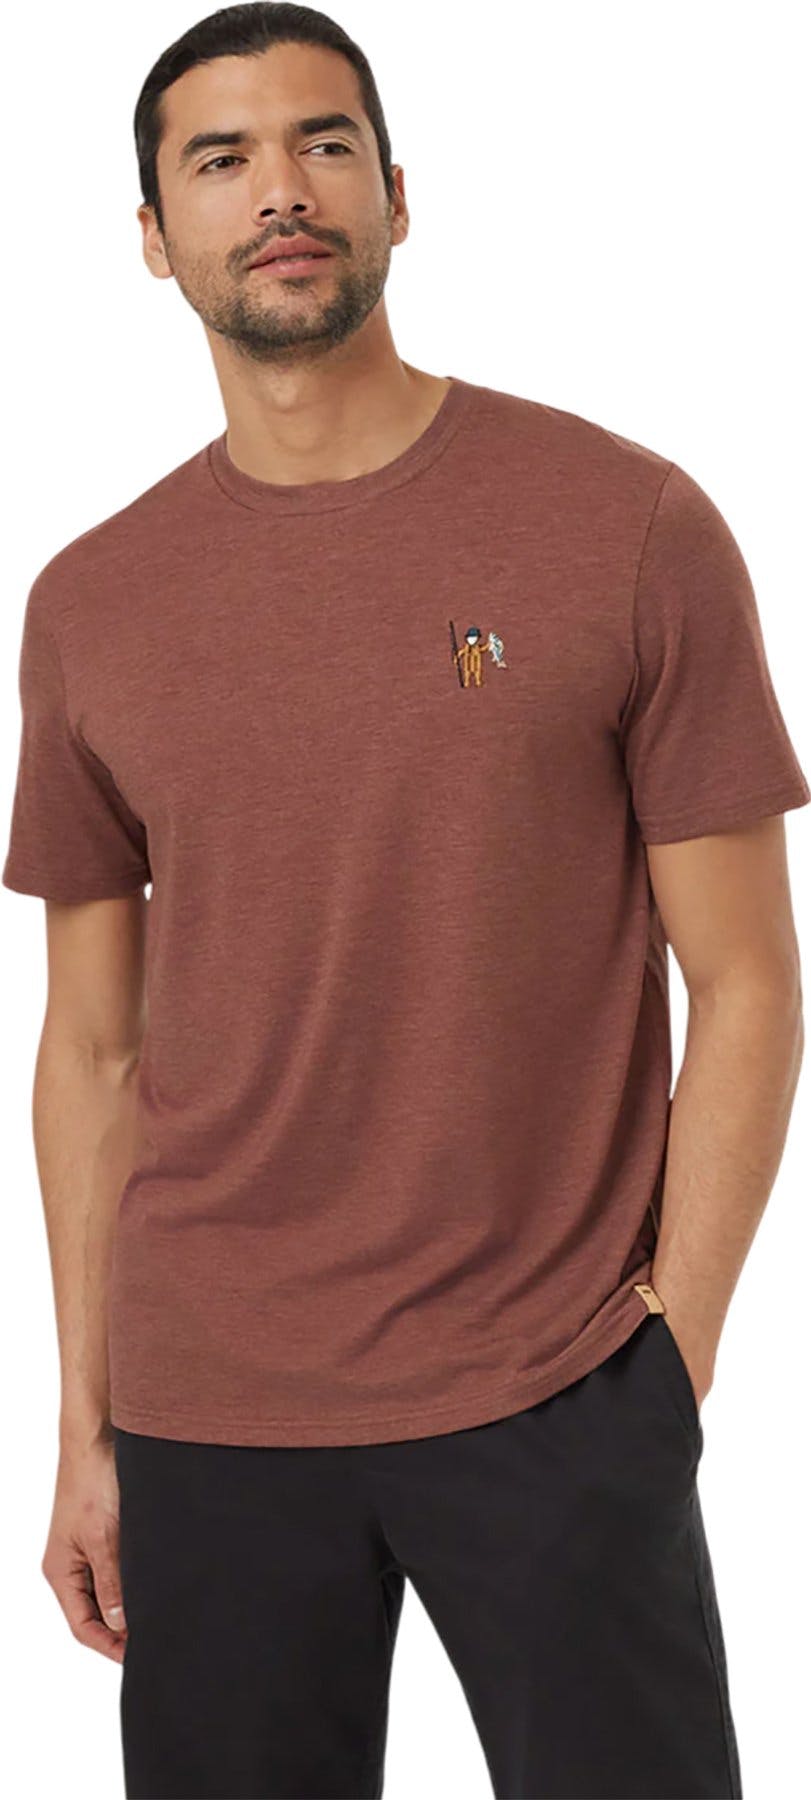 Product image for Sasquatch T-Shirt - Men's